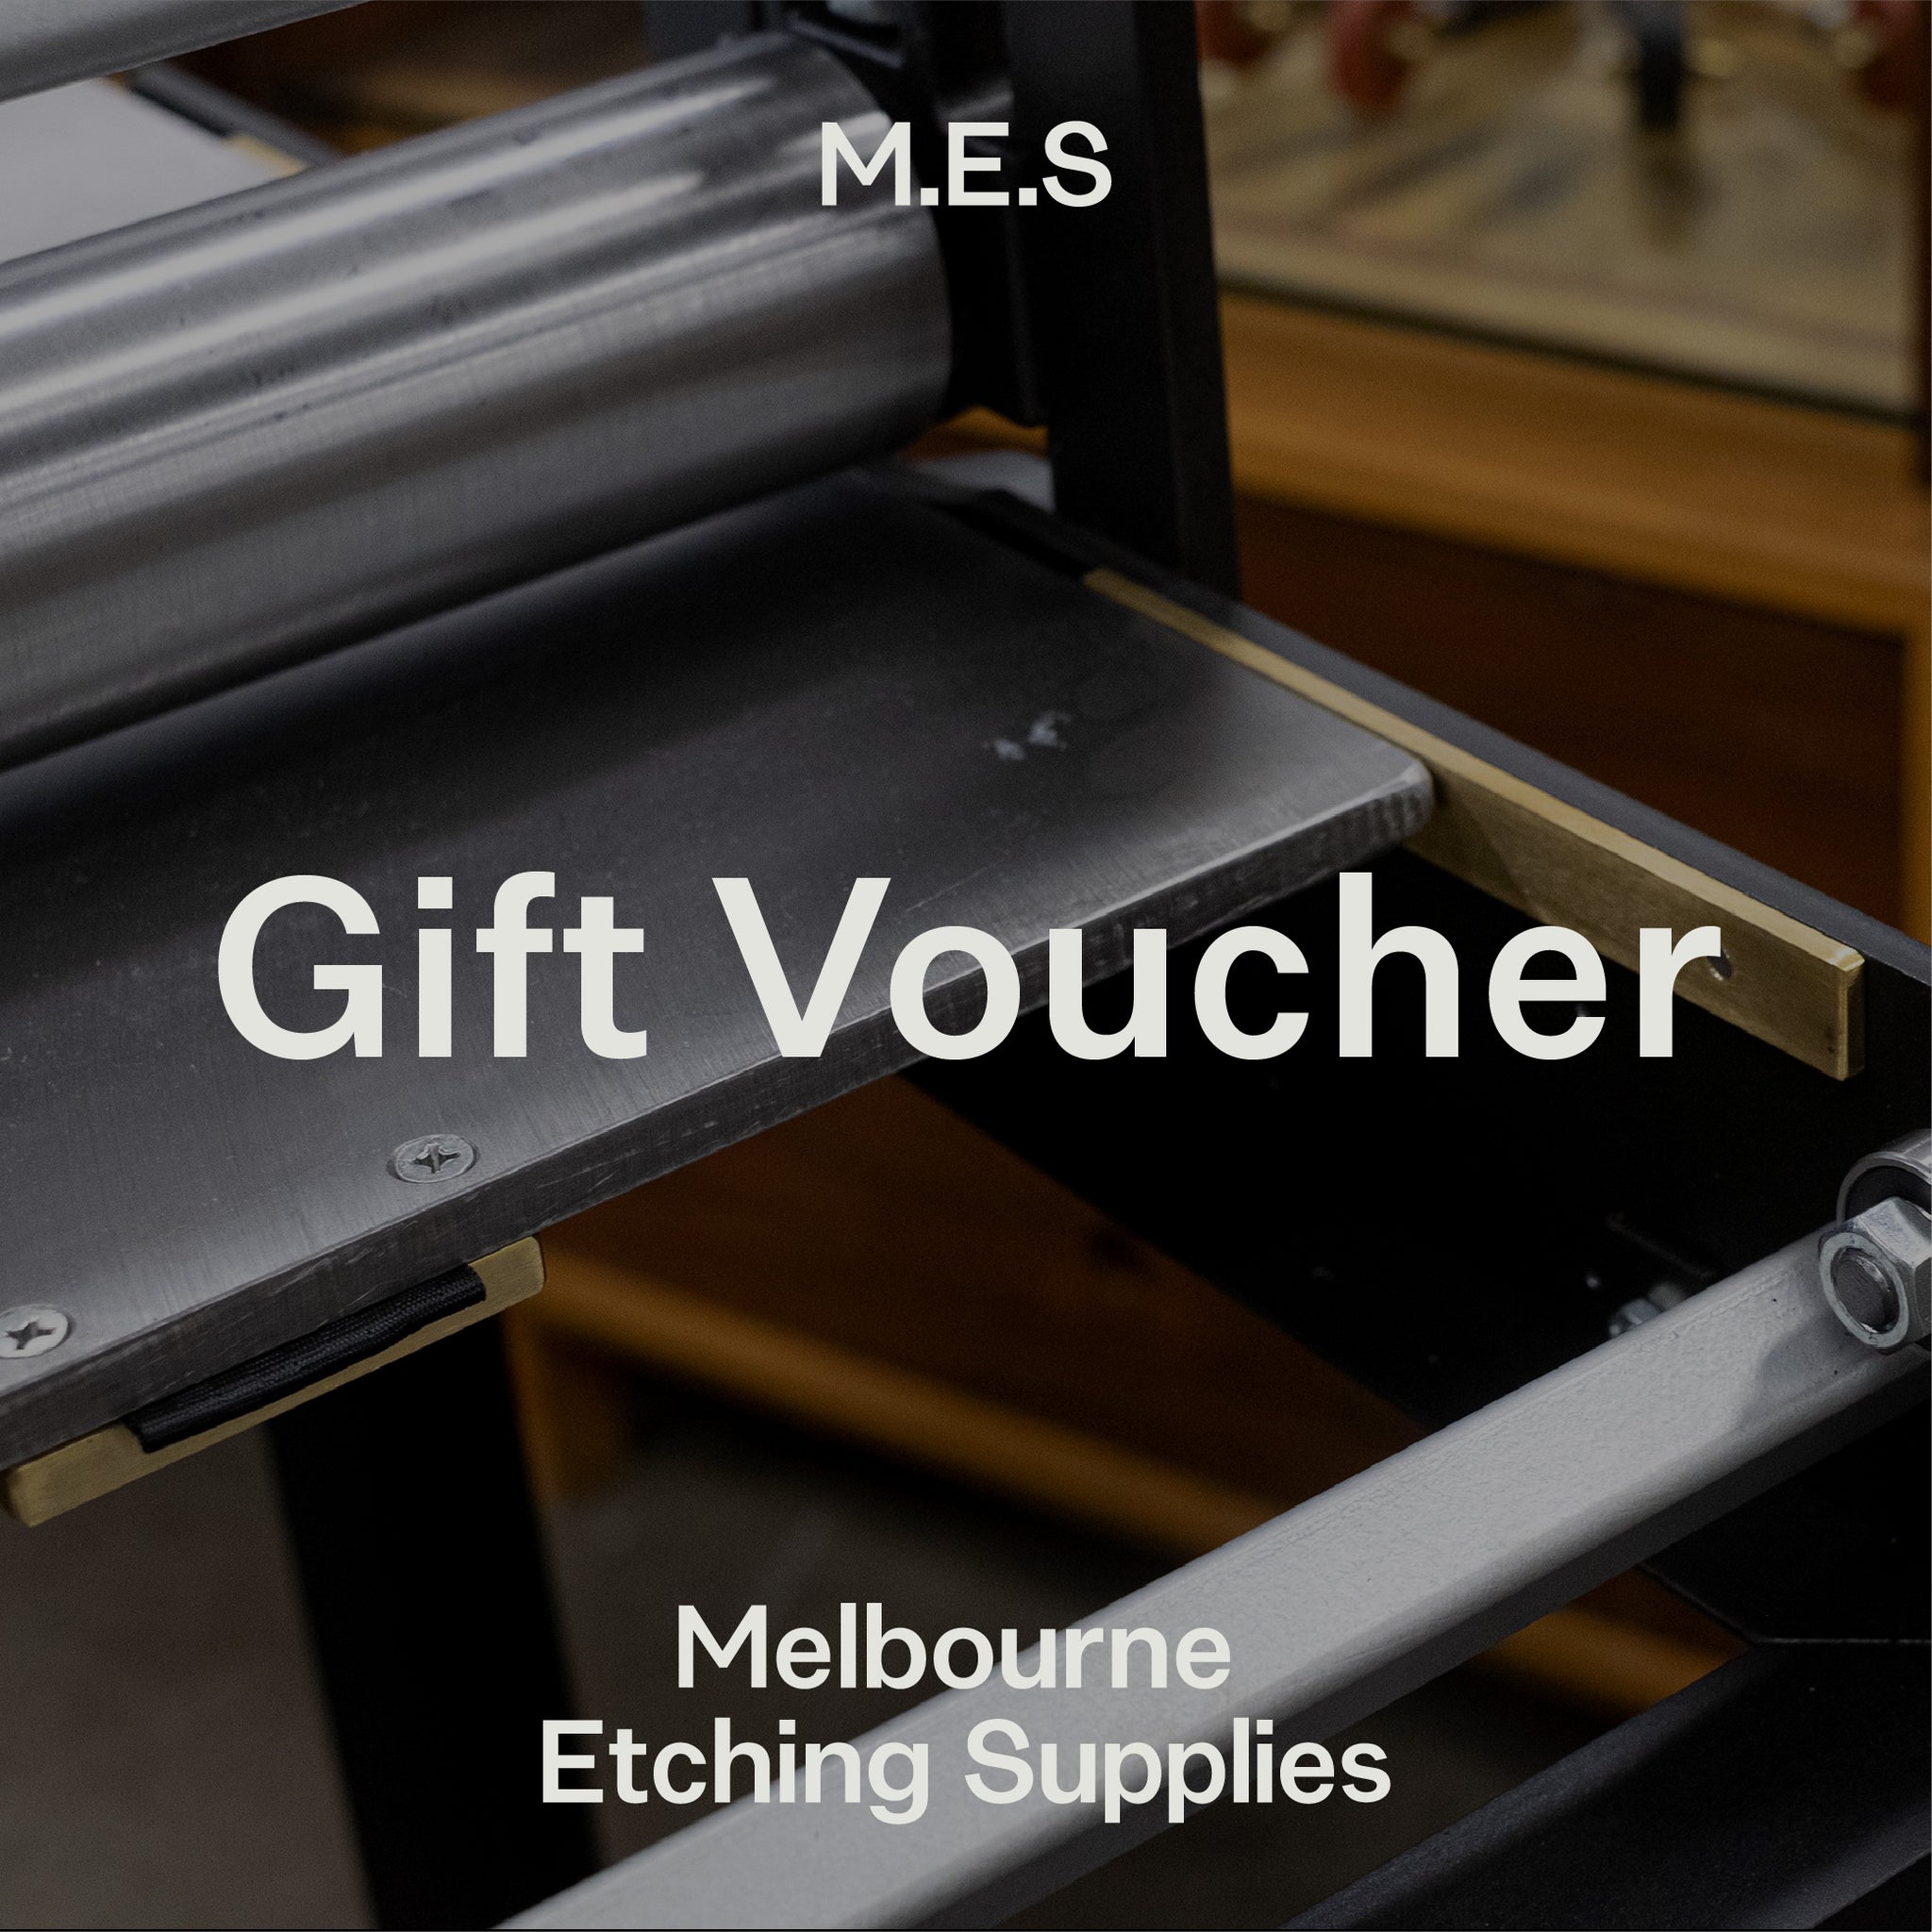 M.E.S Gift Vouchers - Melbourne Etching Supplies